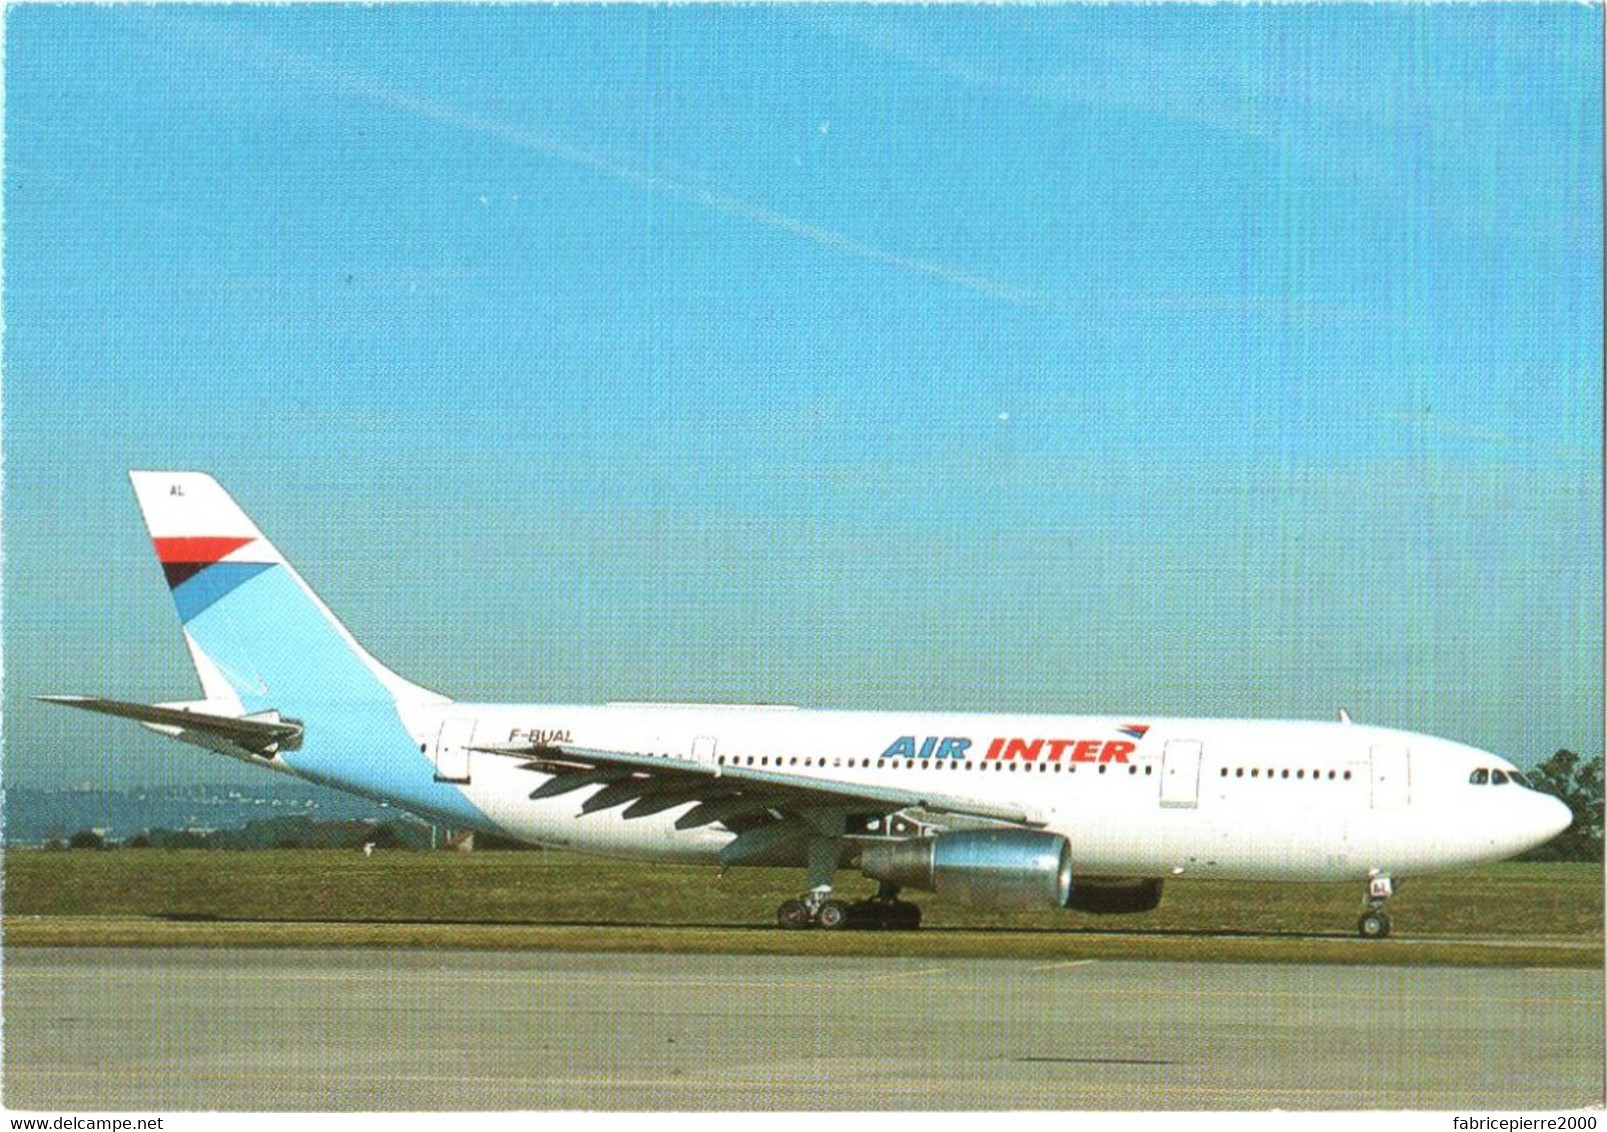 CPM 75 Paris - Aéroport De Paris-Orly. Airbus A-300 B2 (F-BUAL) D'AIR INTER TBE, Scan Recto Verso, Flamme SOS Amitiés - Paris Airports